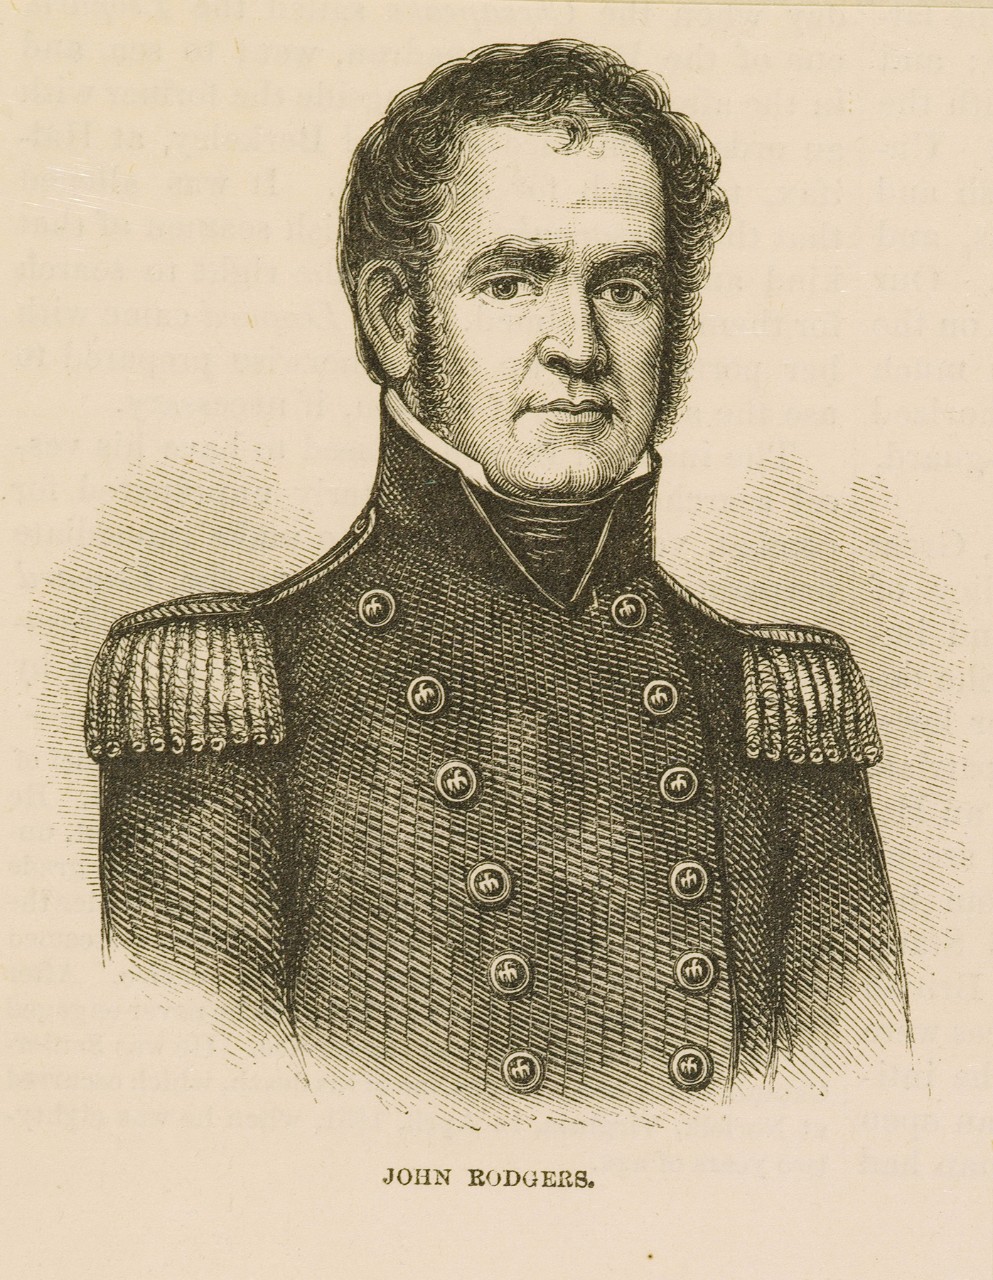 Portrait of man in military uniform